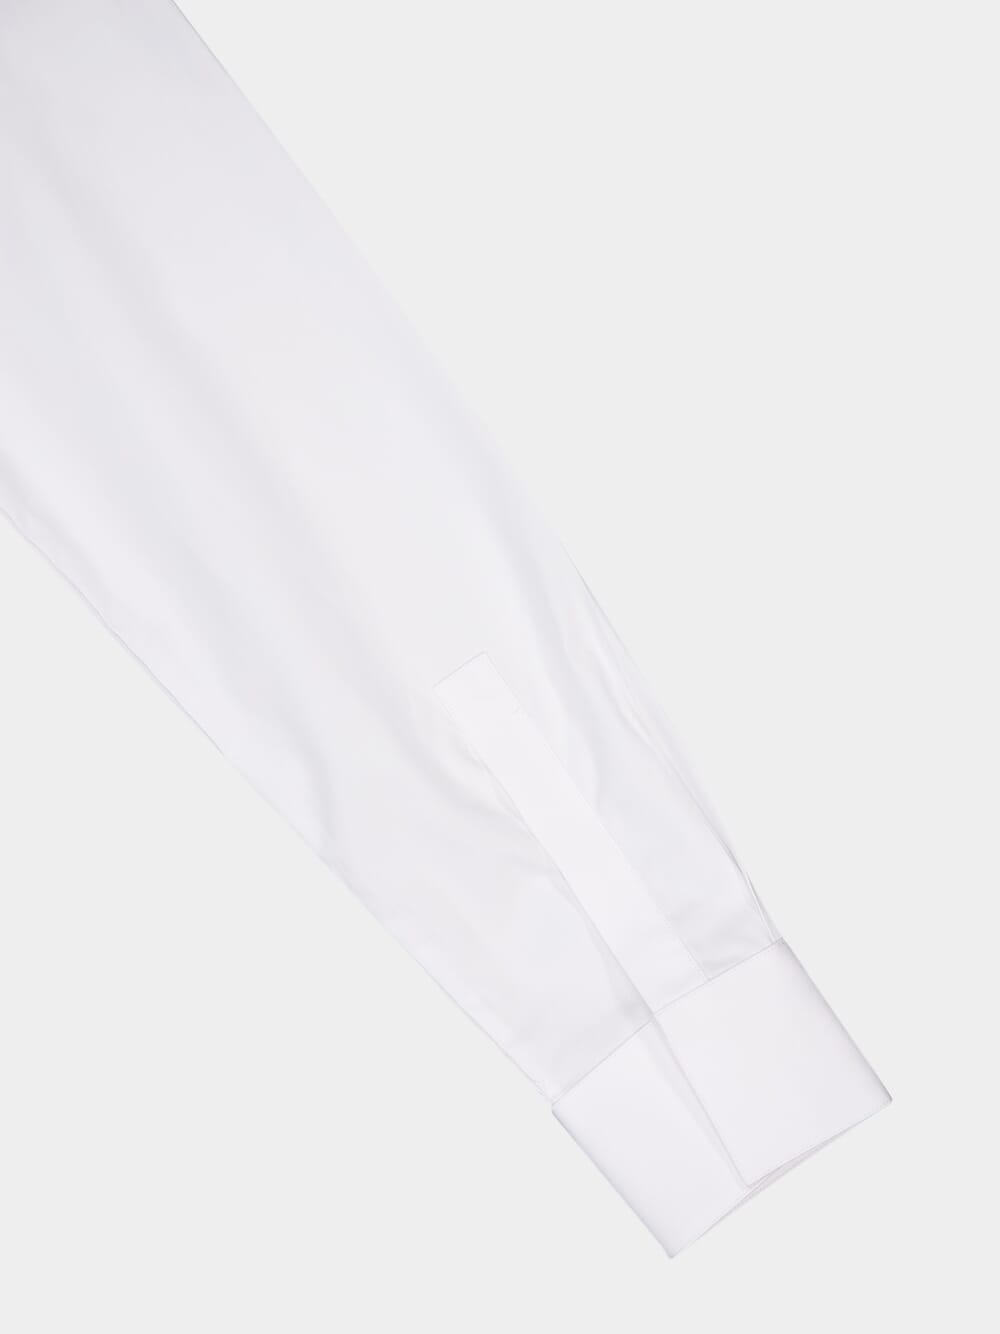 GivenchyClassic White Poplin Shirt at Fashion Clinic